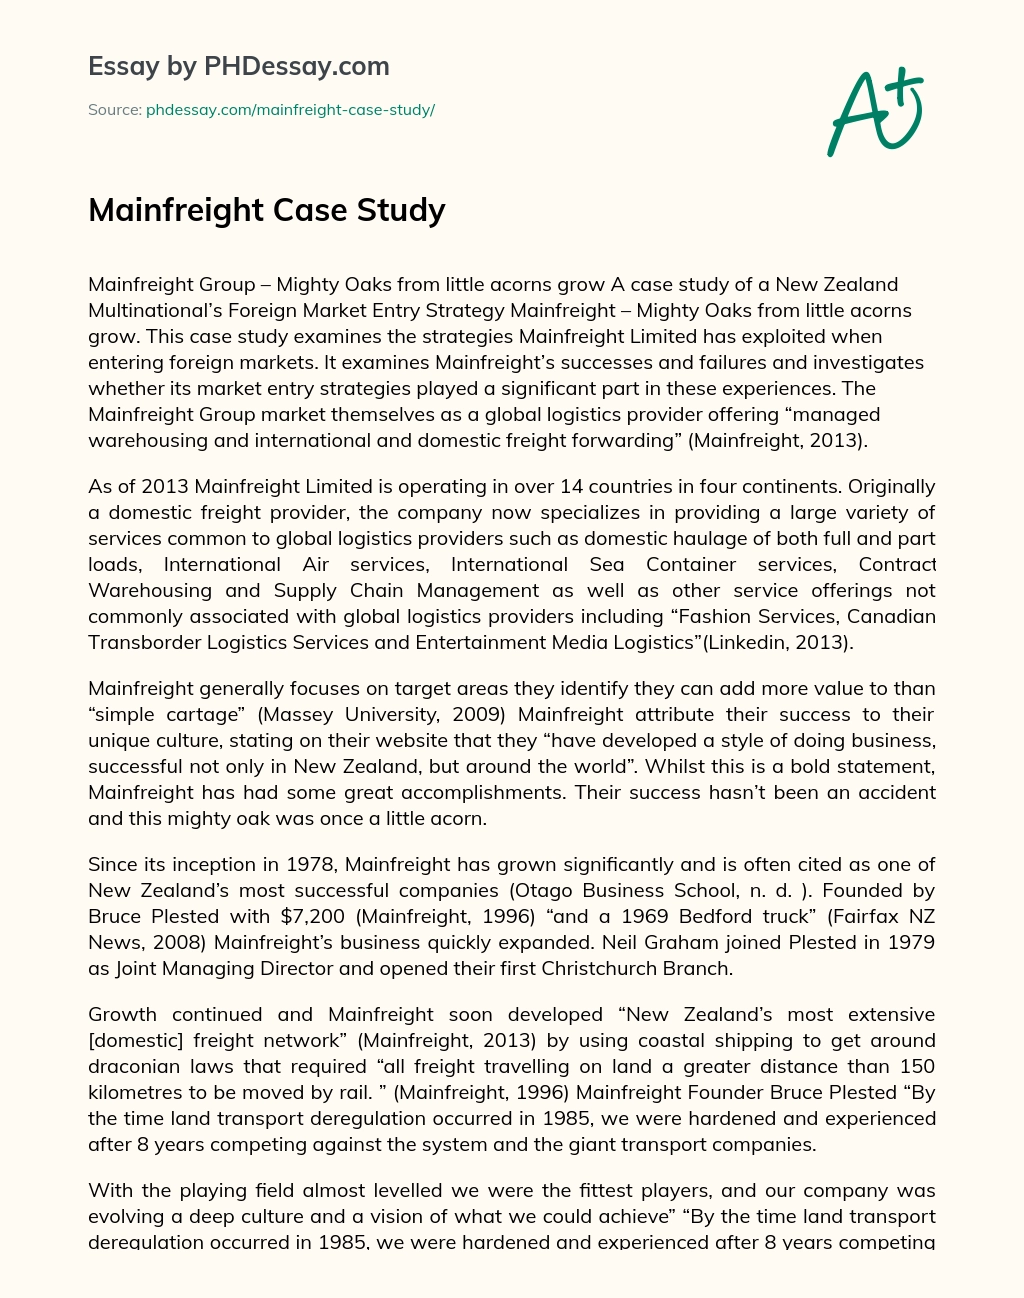 Mainfreight Case Study essay